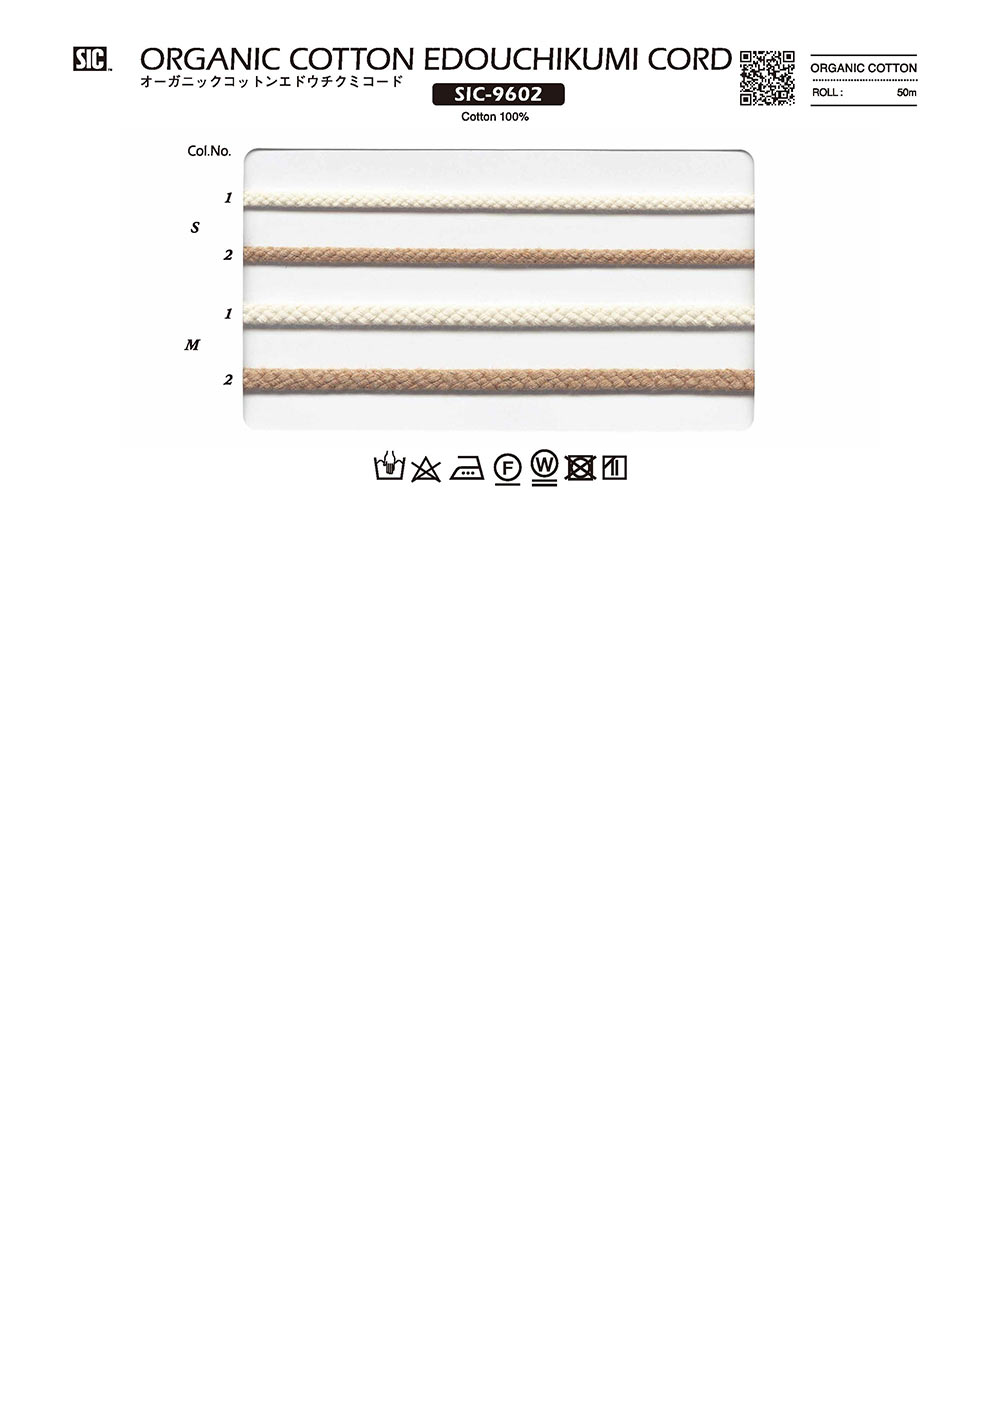 SIC-9602 Educhikumi-Kordel Aus Bio-Baumwolle[Bandbandschnur] SHINDO(SIC)